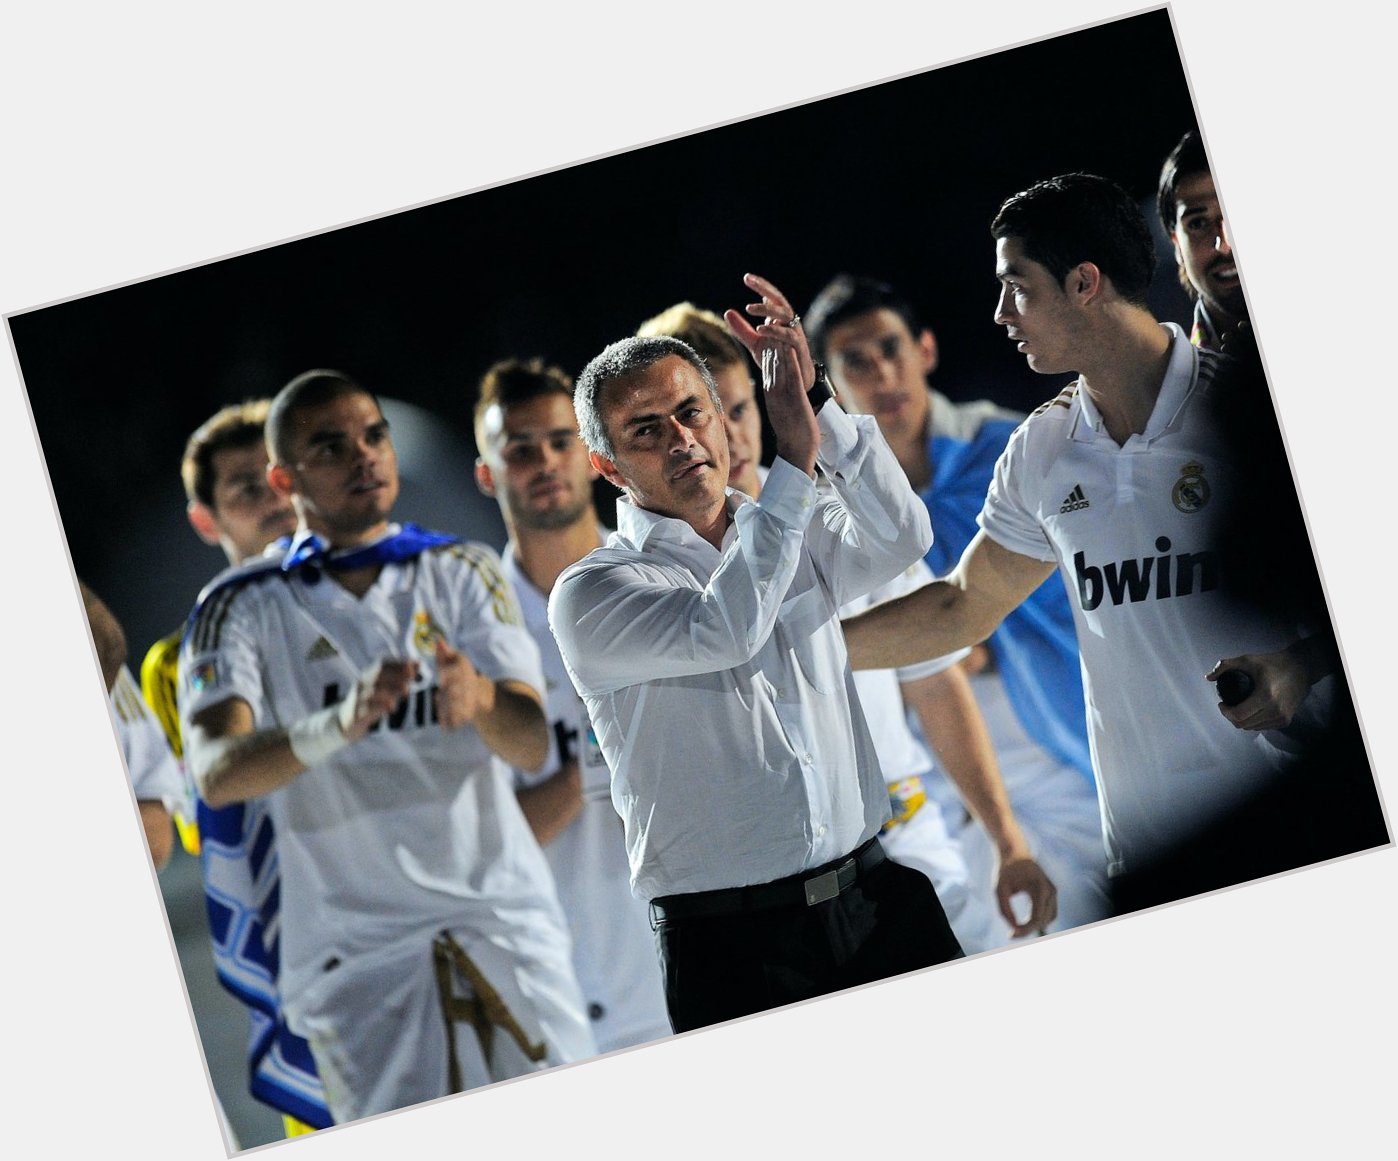 Happy birthday, José Mourinho!

Thanks for the Record Break 11/12 LaLiga campaign. 